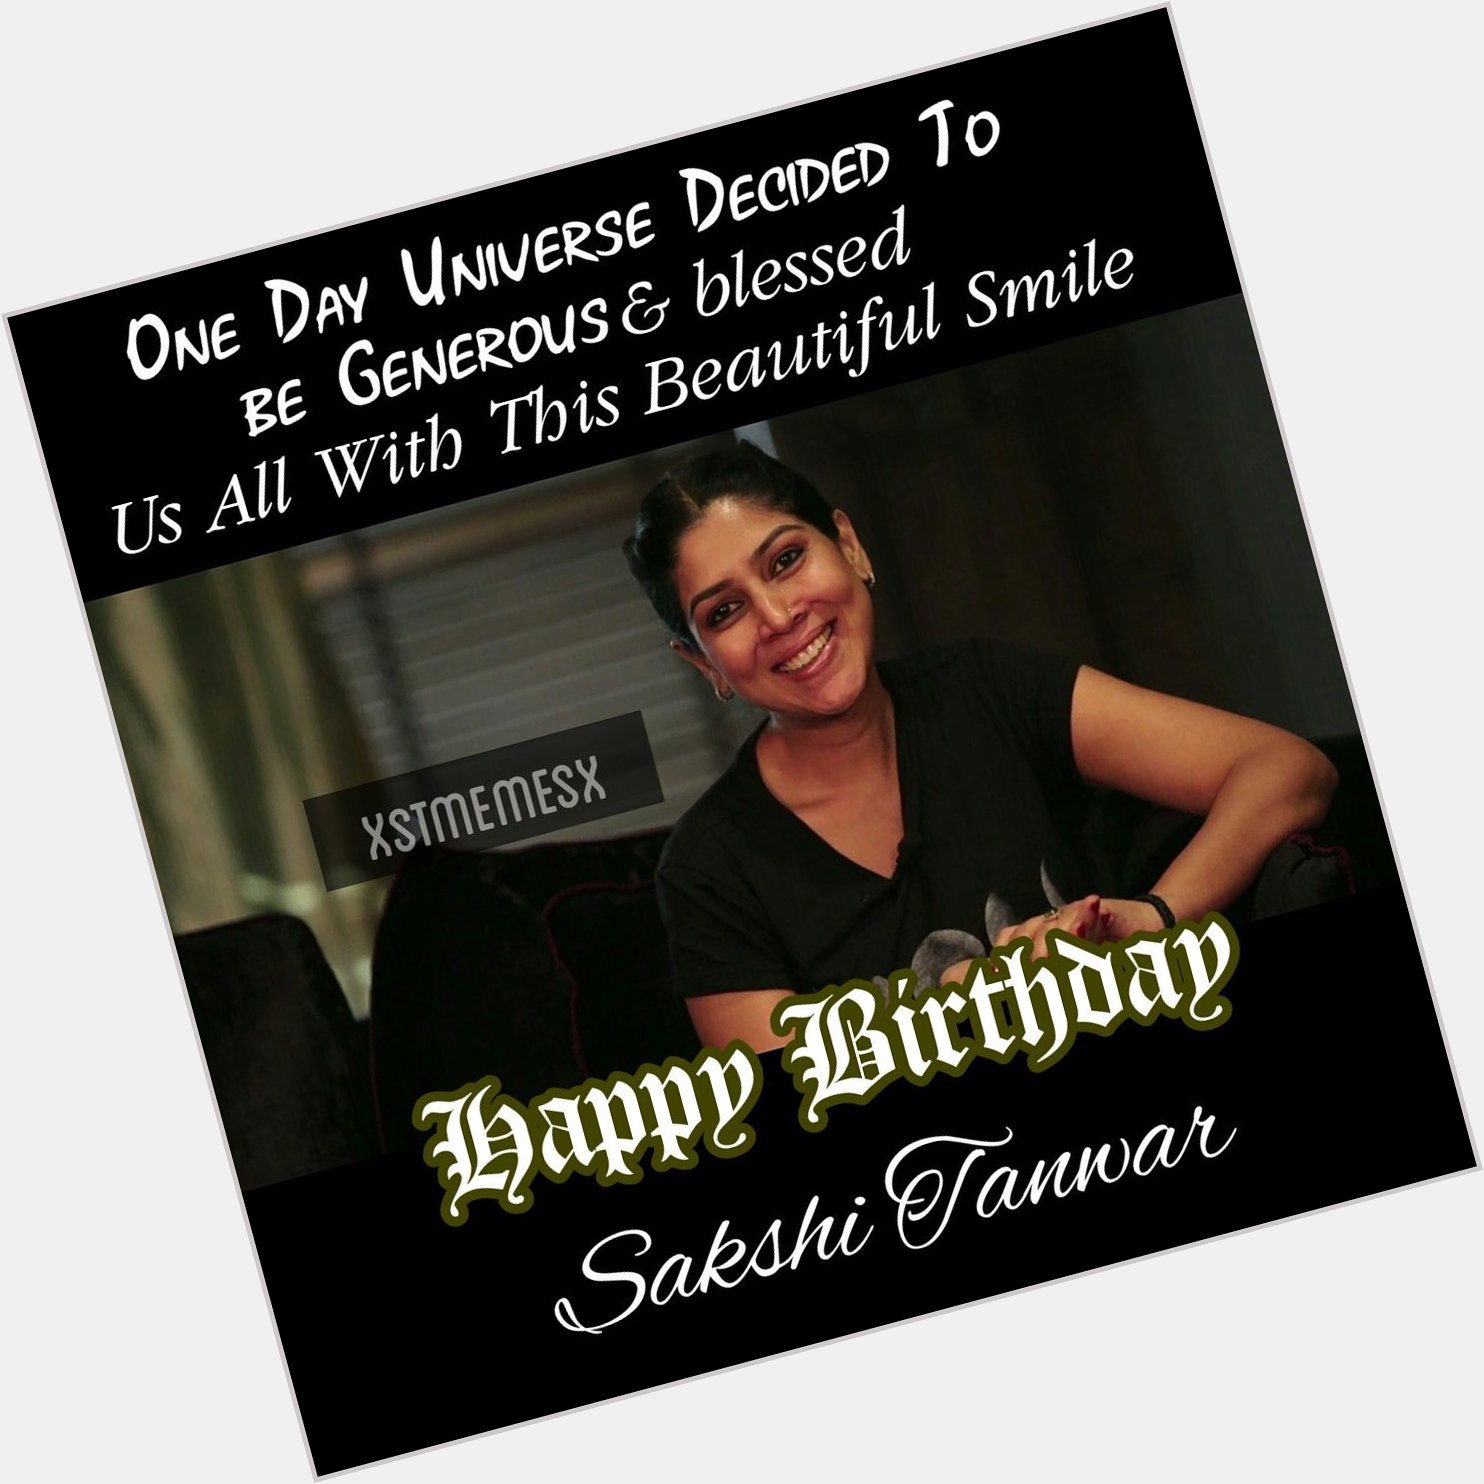 Happy Birthday Sakshi Tanwar
& Her precious smile 